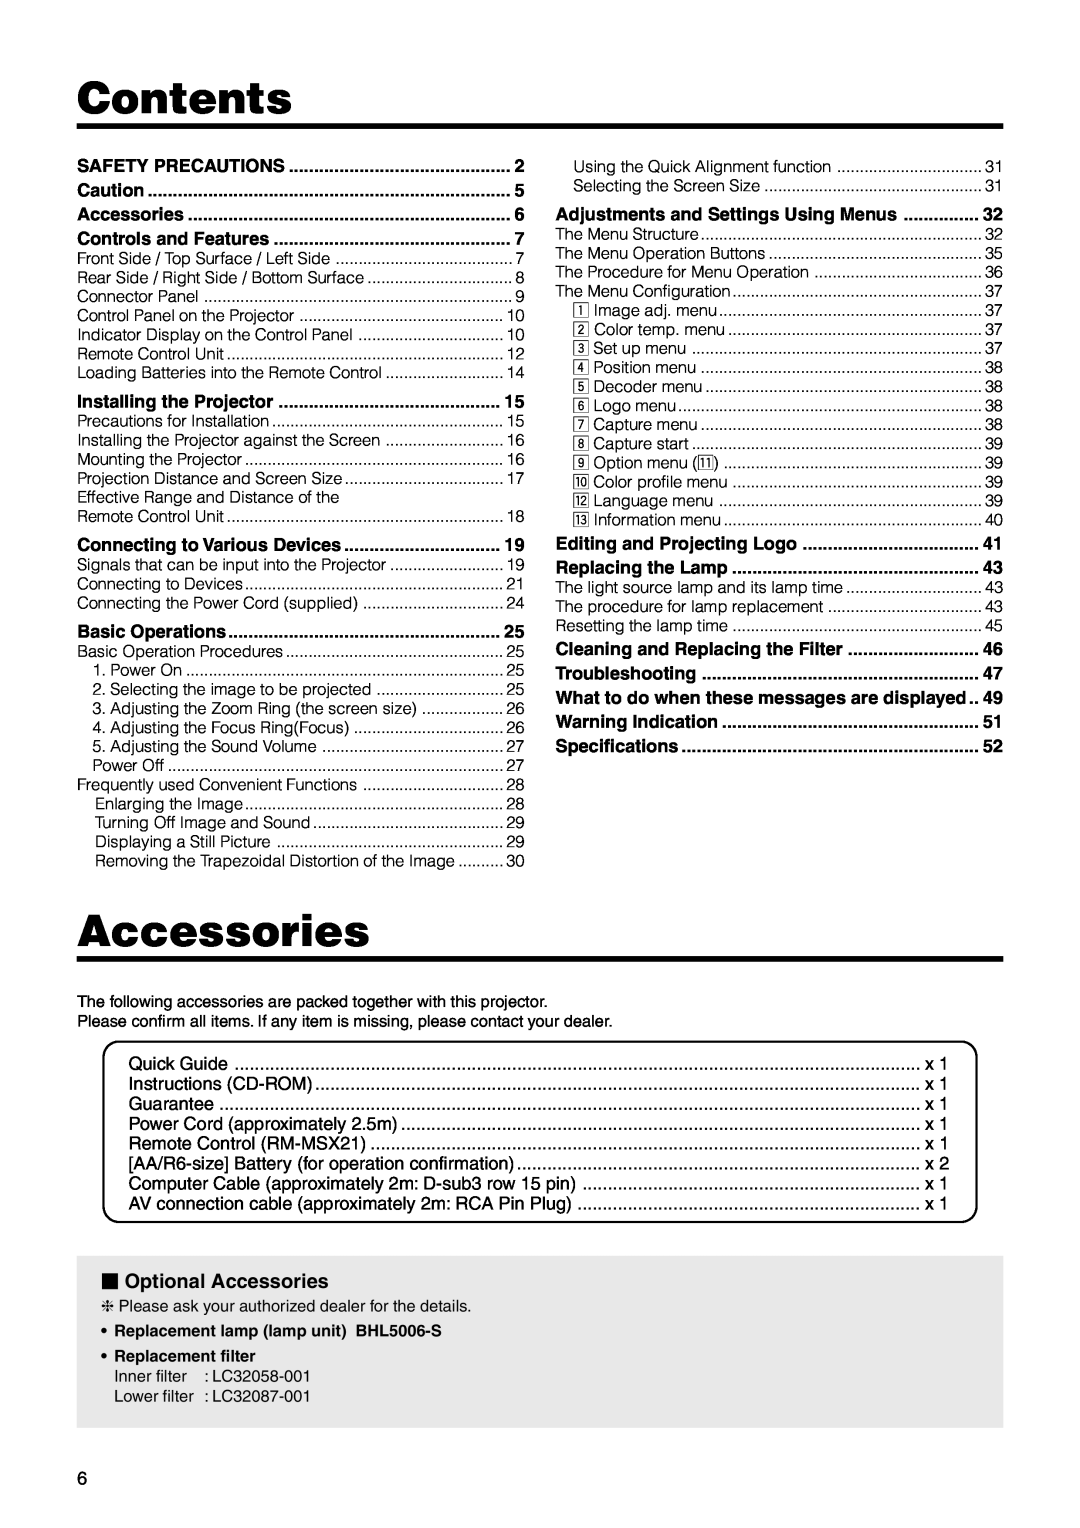 JVC DLA-SX21U manual Contents,  Optional Accessories, Adjustments and Settings Using Menus, Safety Precautions 